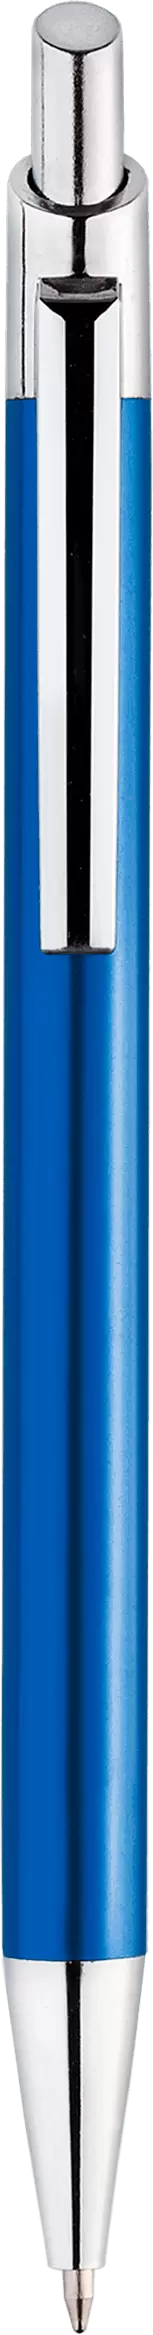 Ручка TIKKO NEW Синяя 2105-01